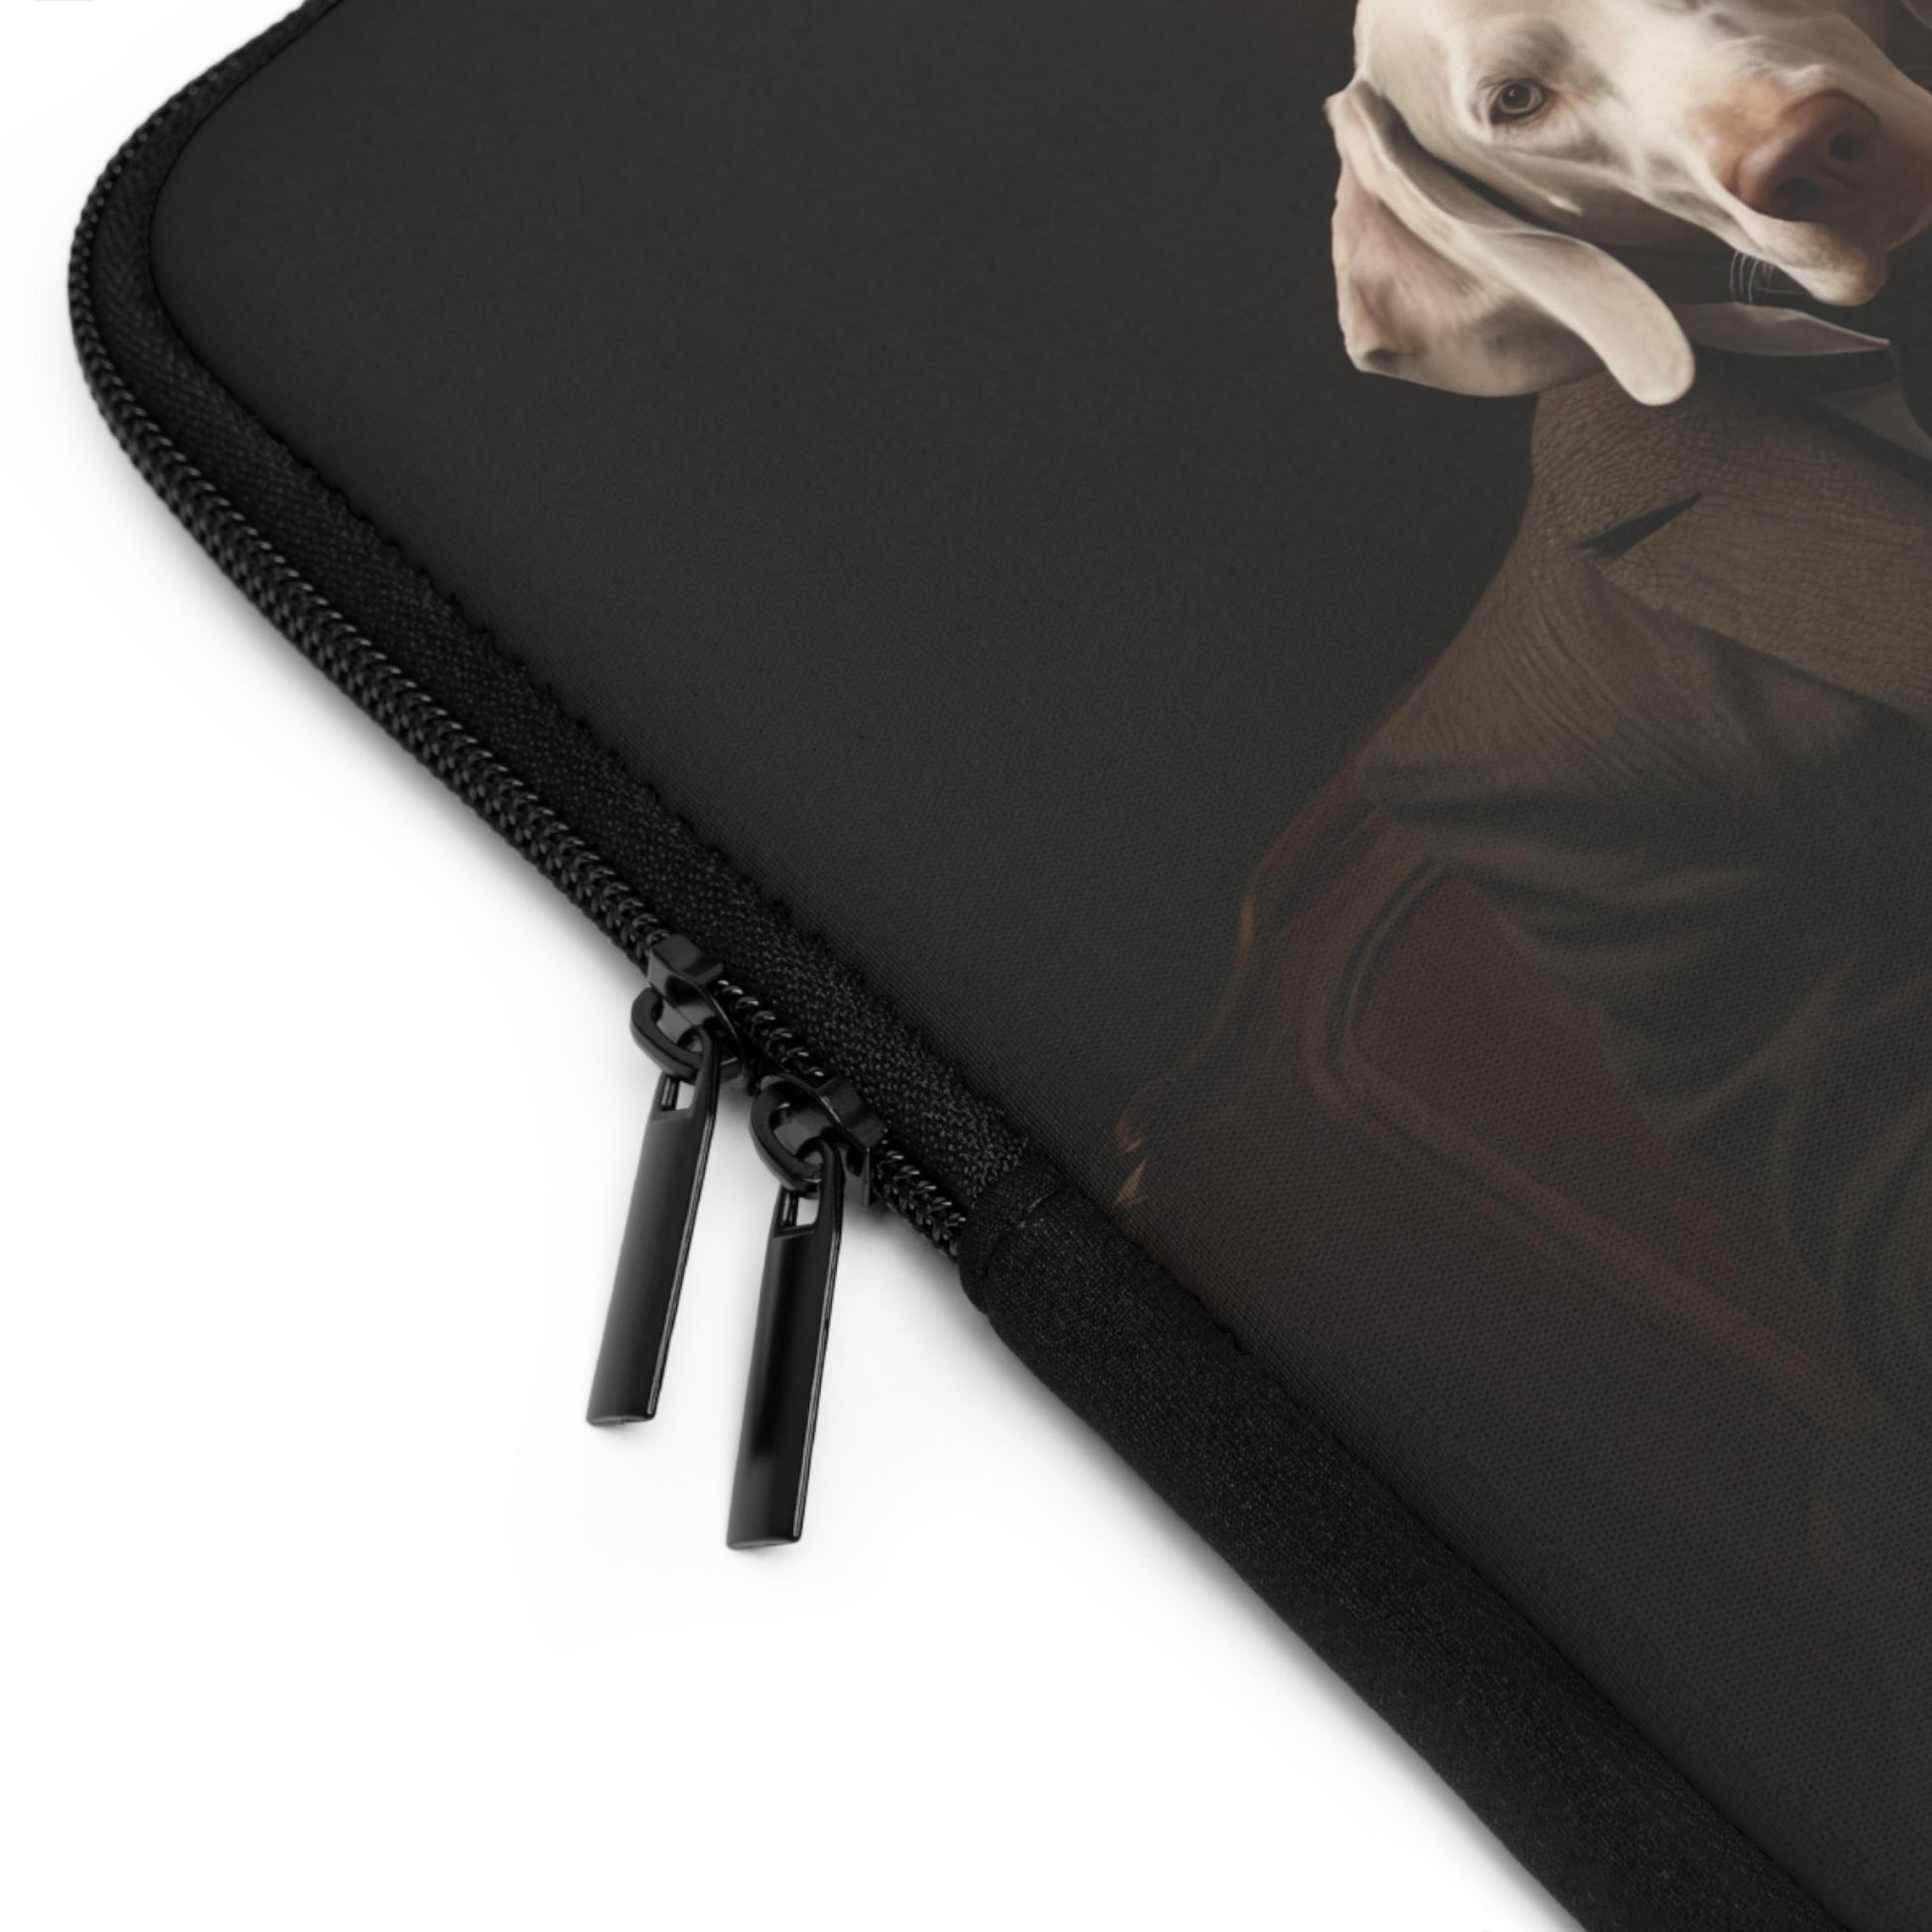 Custom designed Laptop Sleeve featuring classic Weimaraner dog design - Hobbster